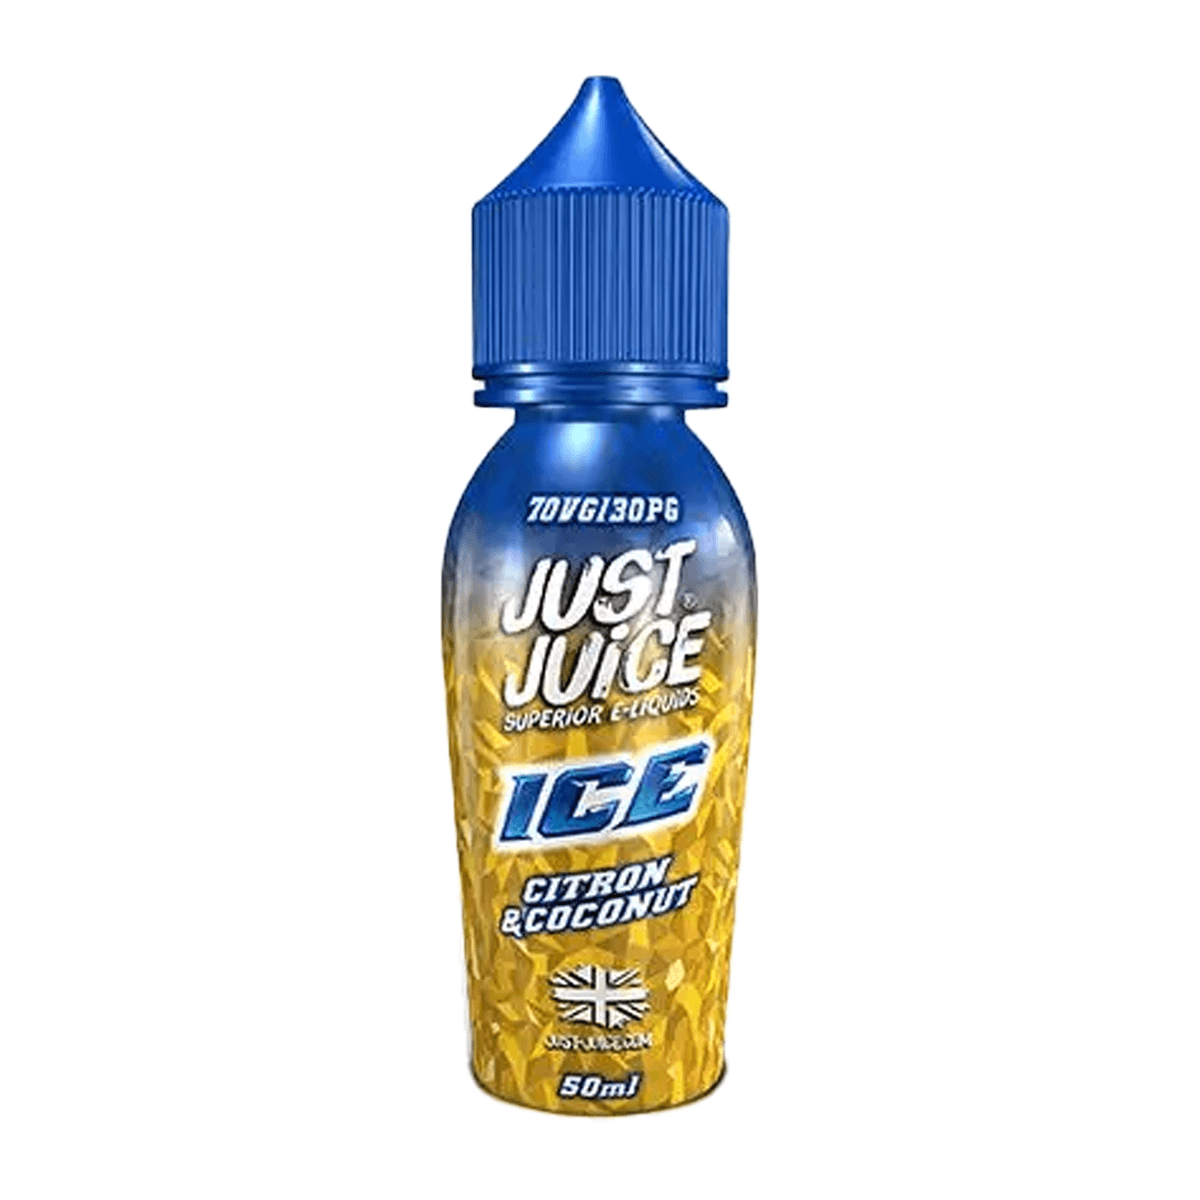 E-Liquid Citron & Coconut Ice 50ml Shortfill By Just Juice